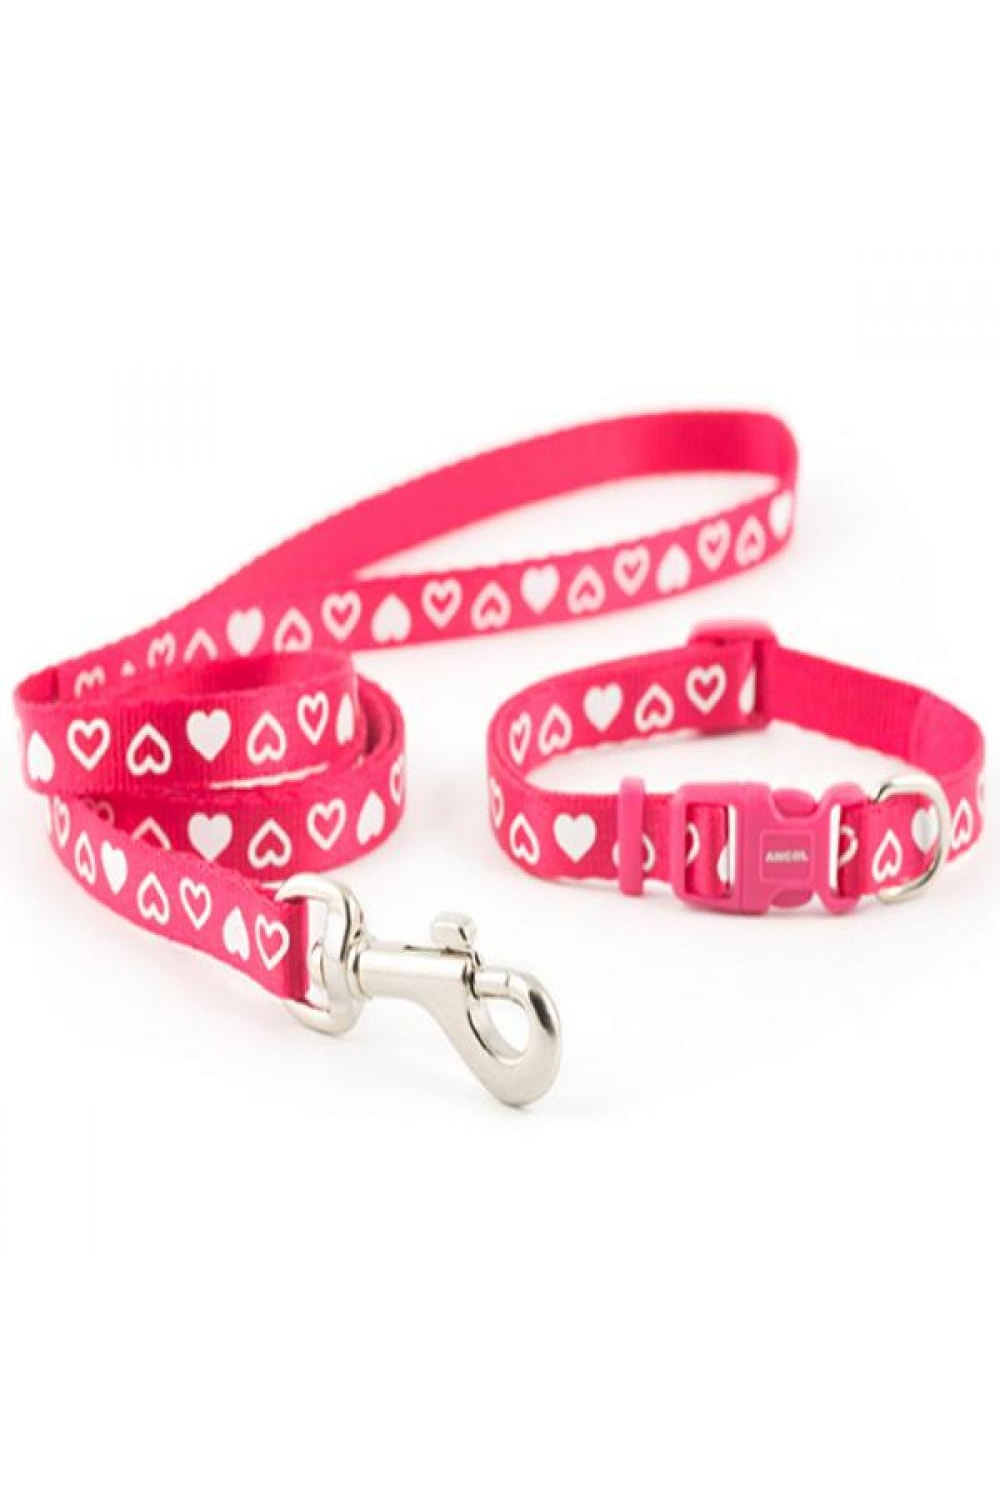 Ancol Small Bite Hearts Dog Collar And Leash Set